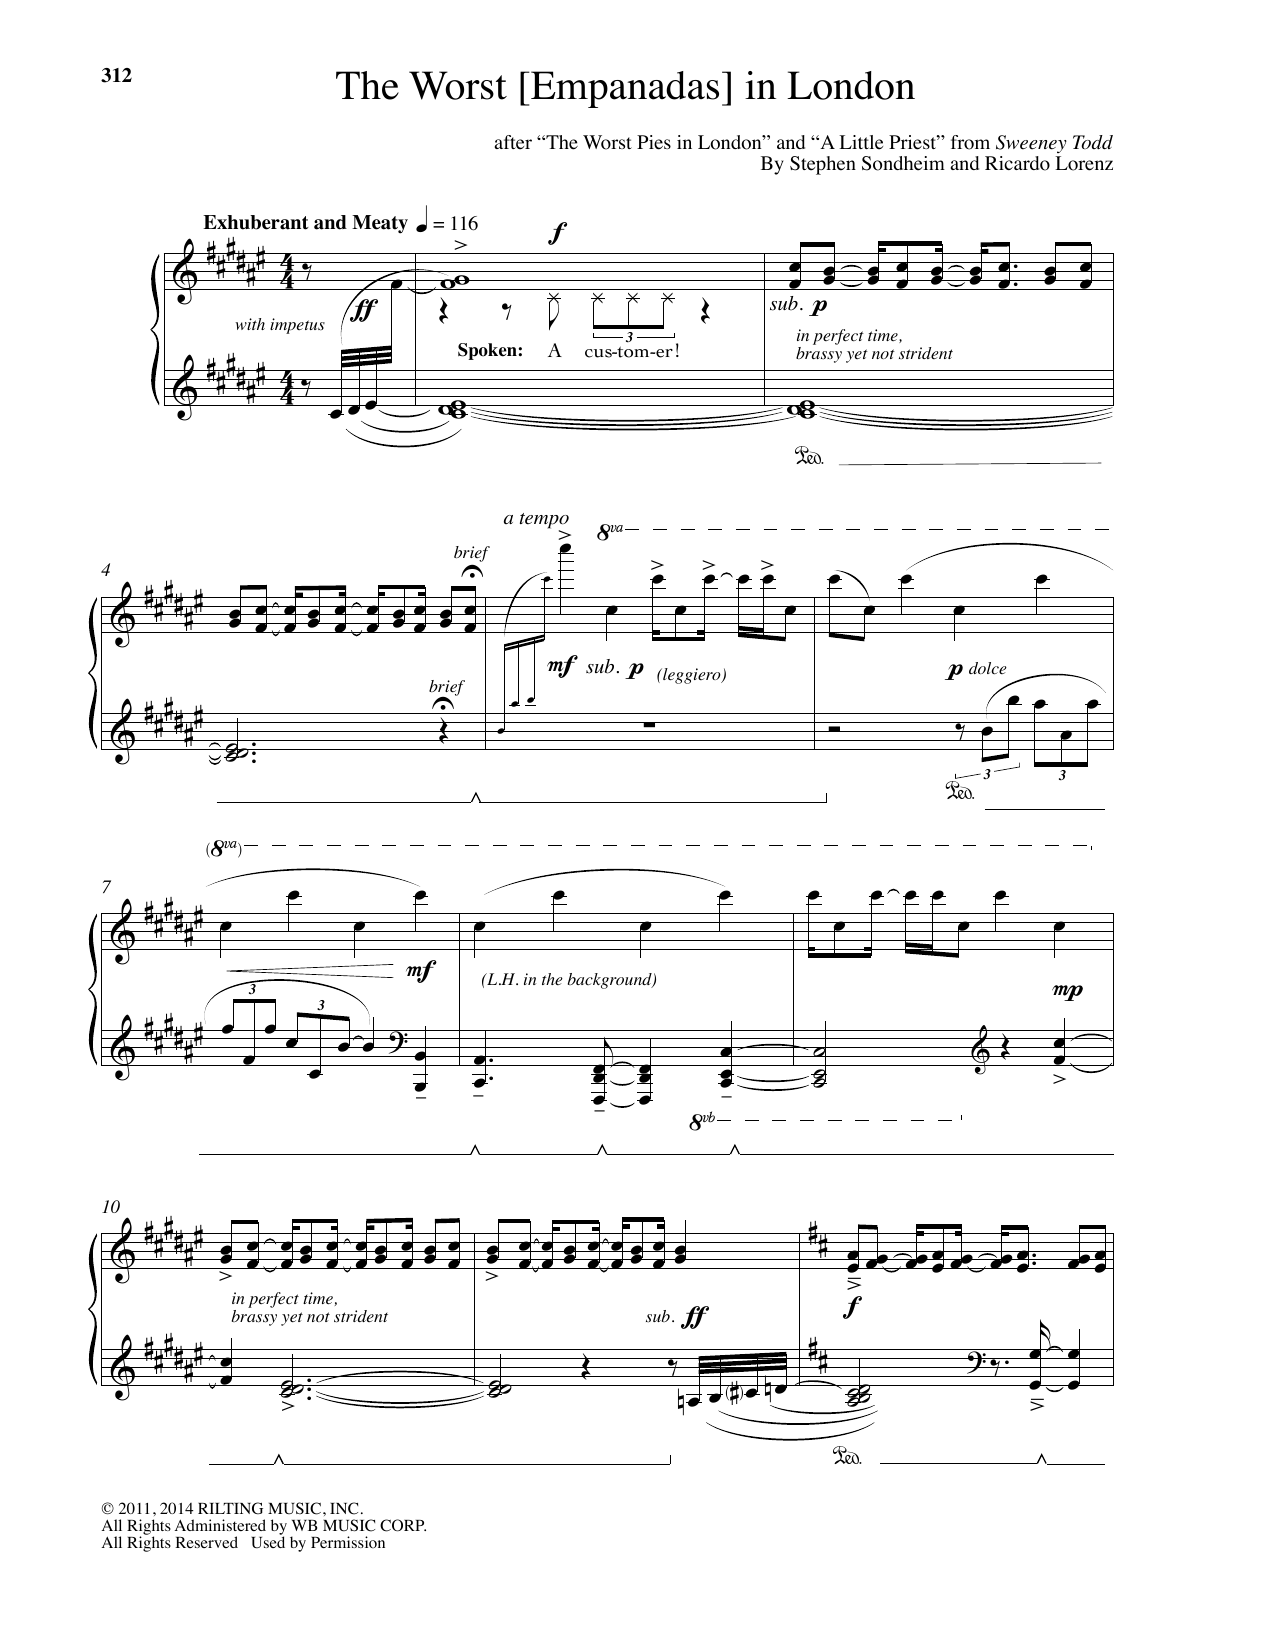 Ricardo Lorenz The Worst [Empanadas] In London Sheet Music Notes & Chords for Piano - Download or Print PDF